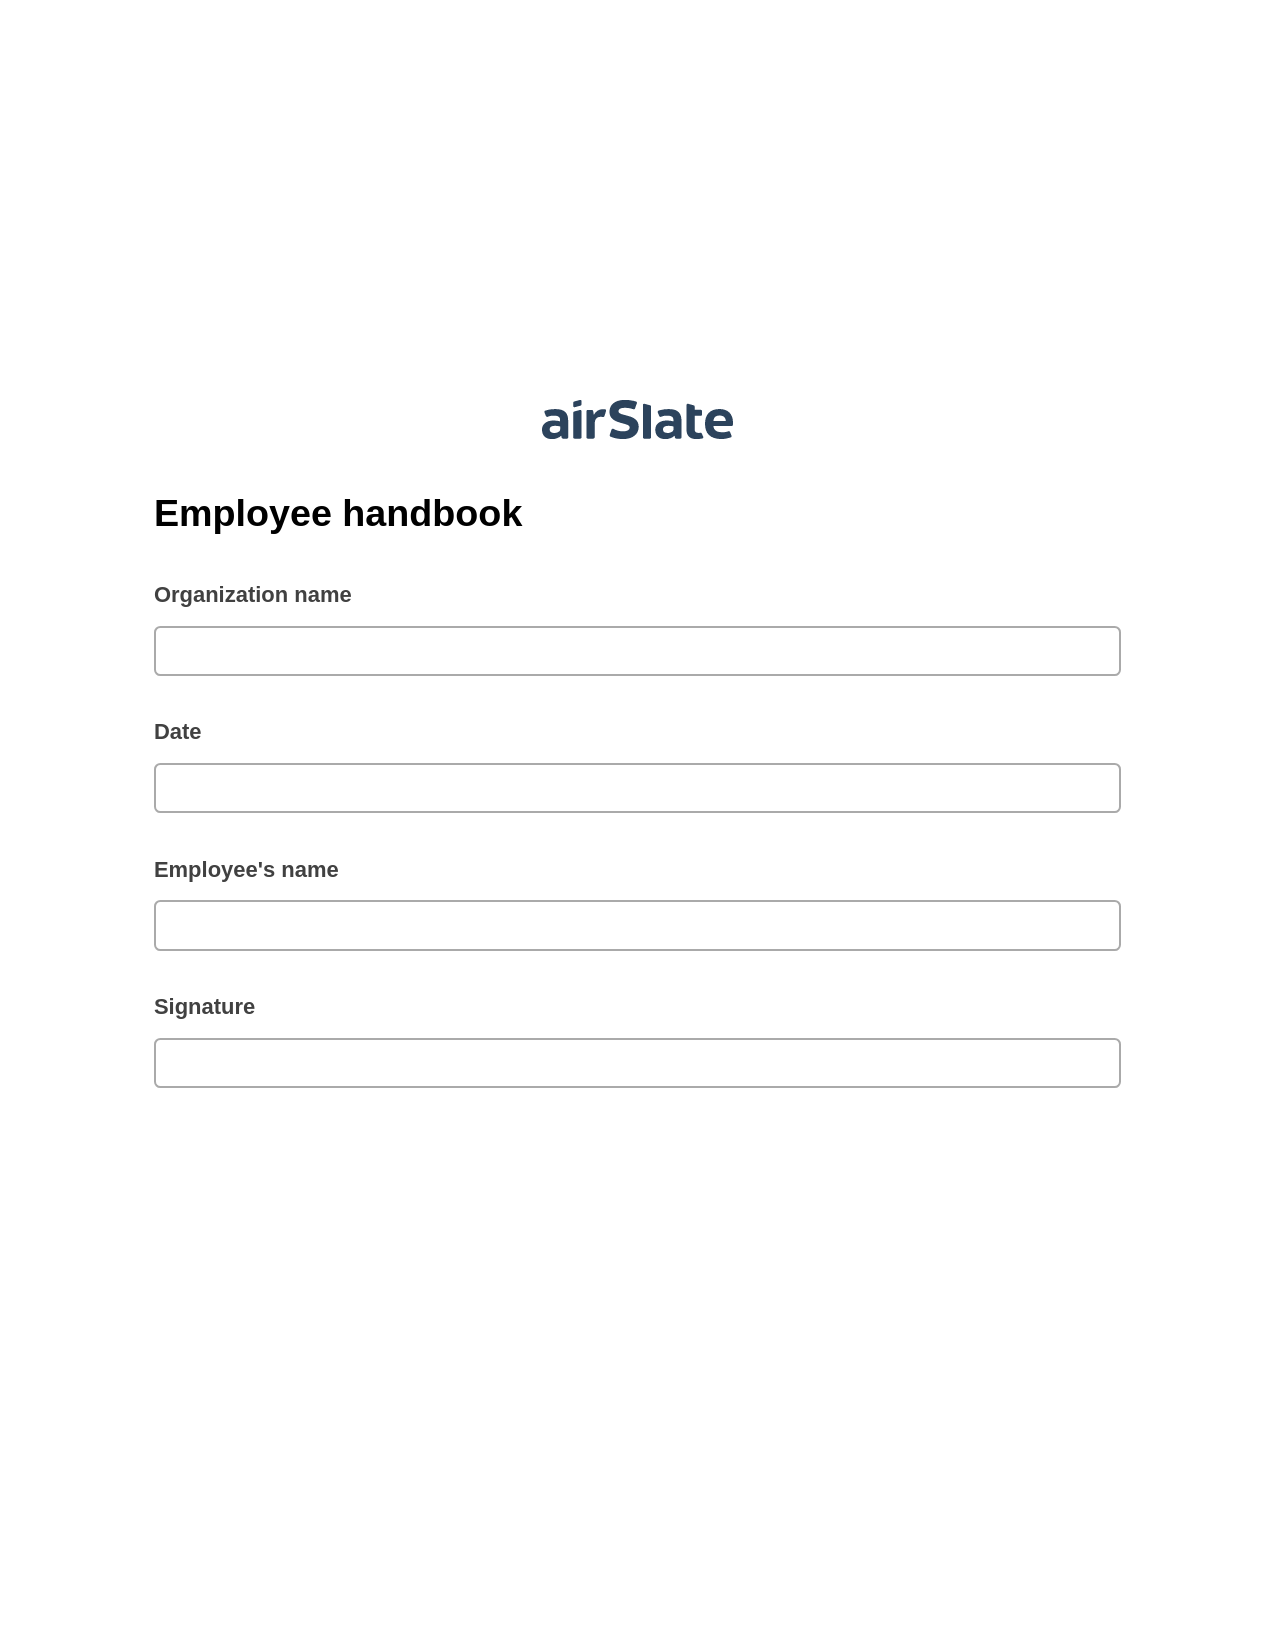 Employee handbook Pre-fill from CSV File Bot, Create slate bot, Export to Smartsheet